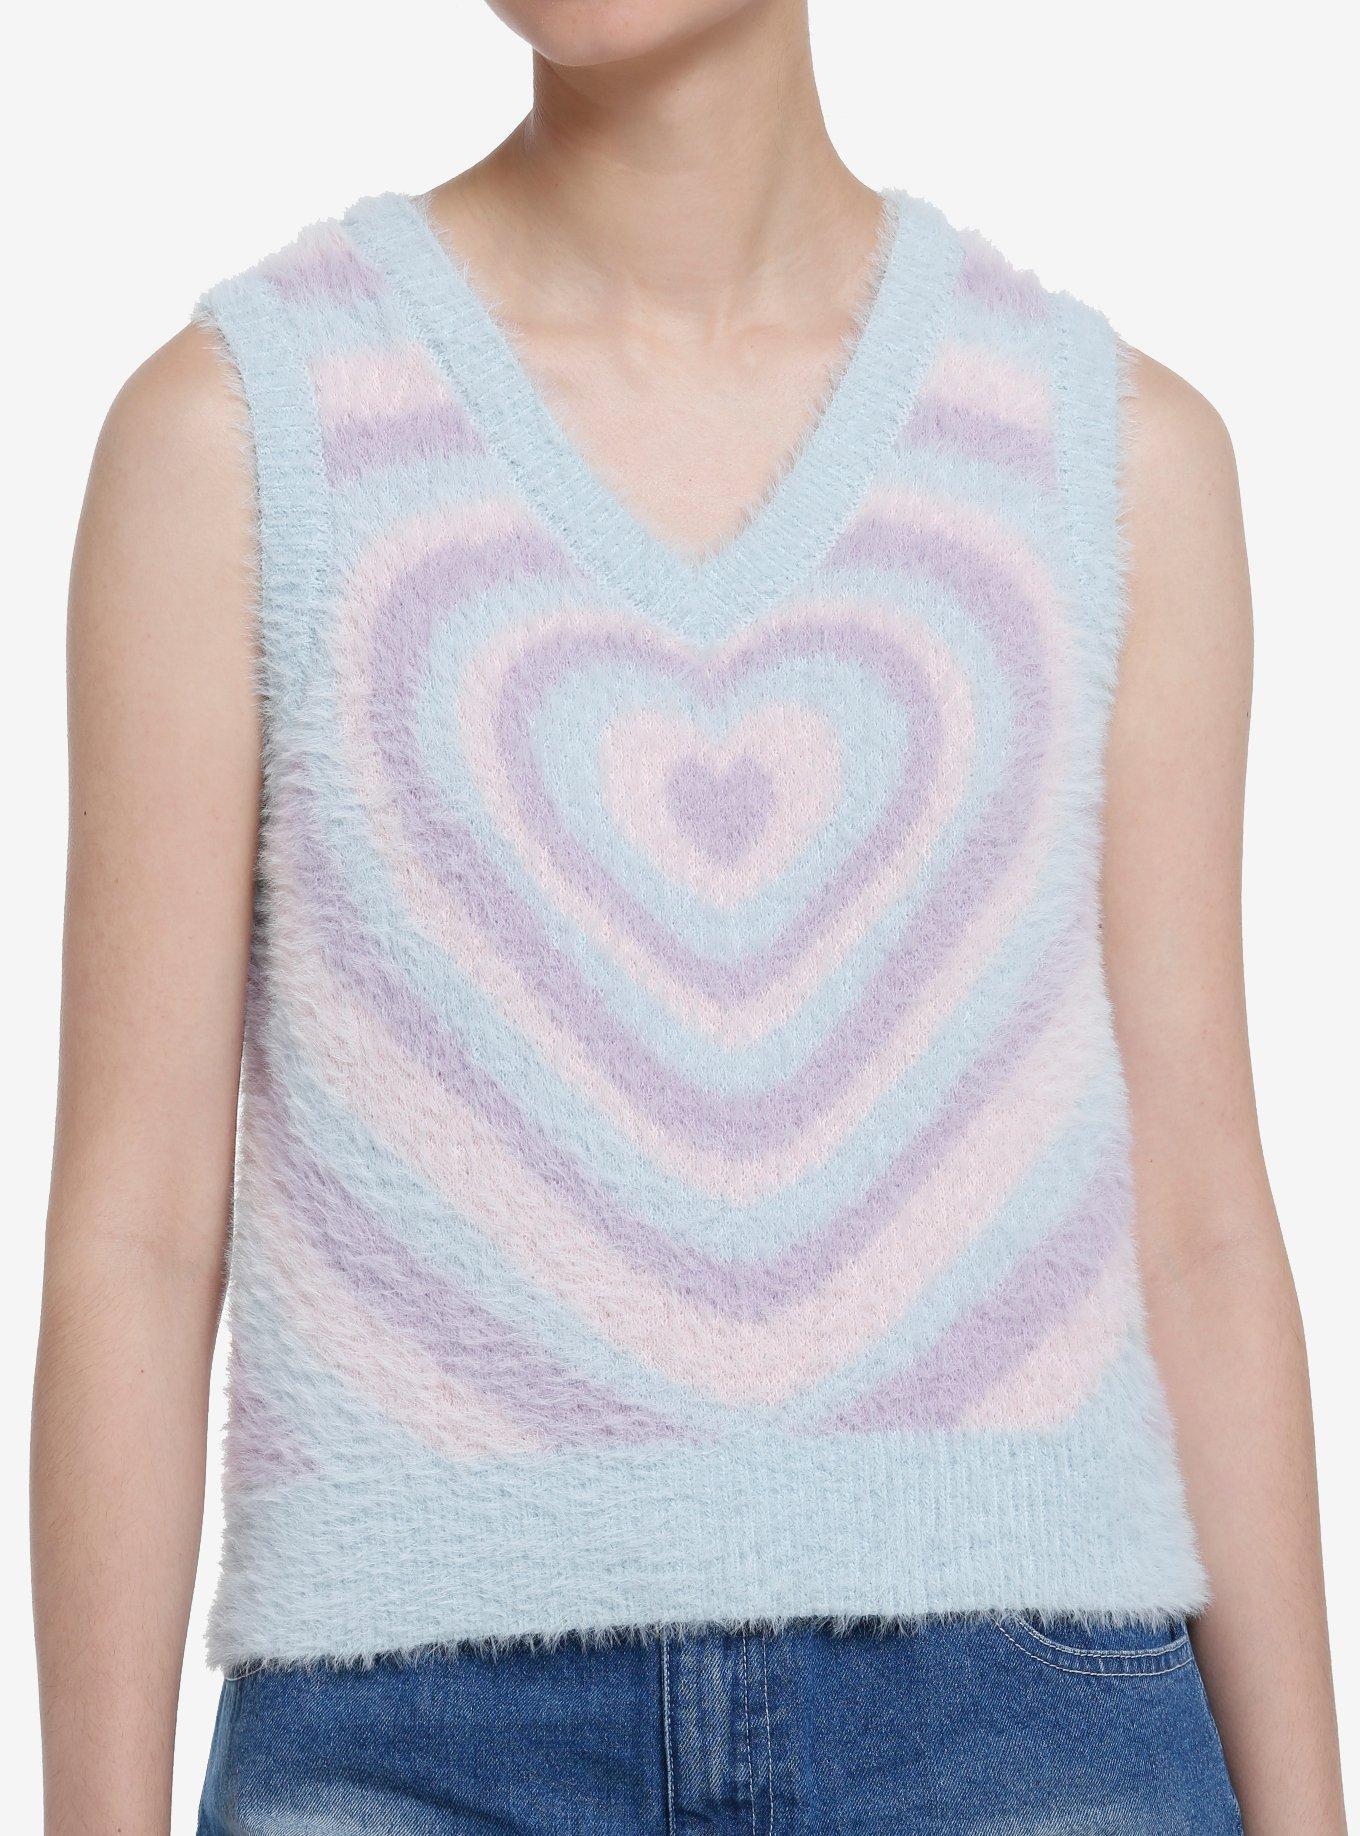 Sweet Society Pastel Hearts Fuzzy Girls Sweater Vest, MULTI, hi-res